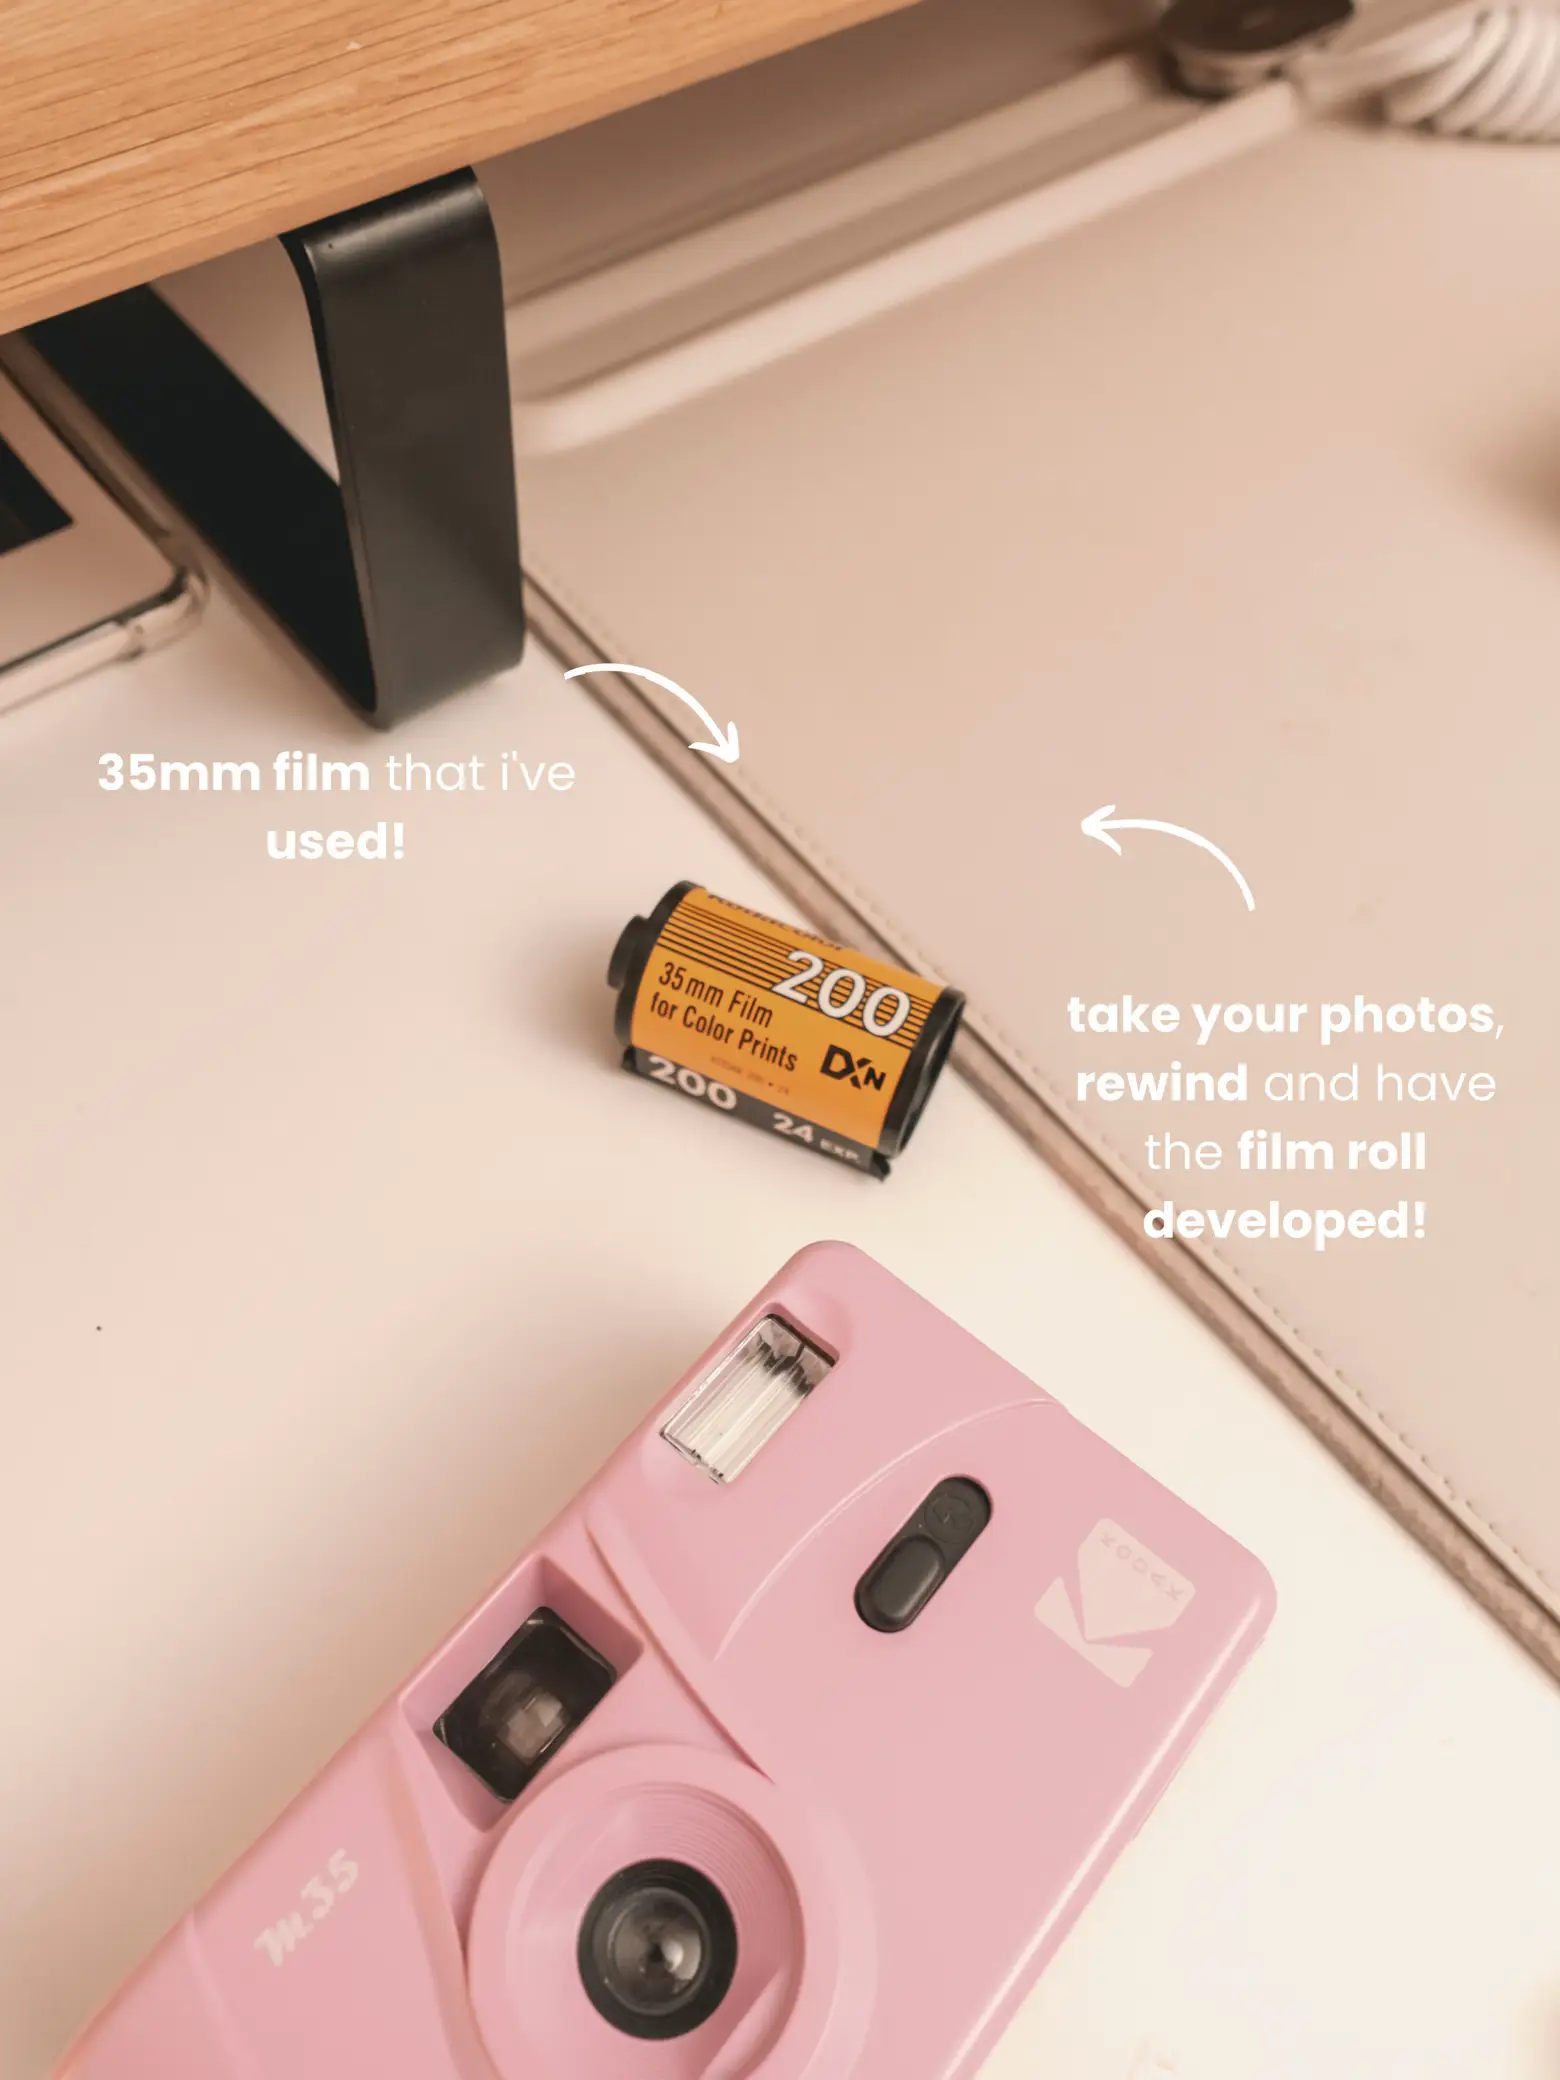 Kodak M35 Reusable 35mm Point and Shoot Pink Compact Film Camera